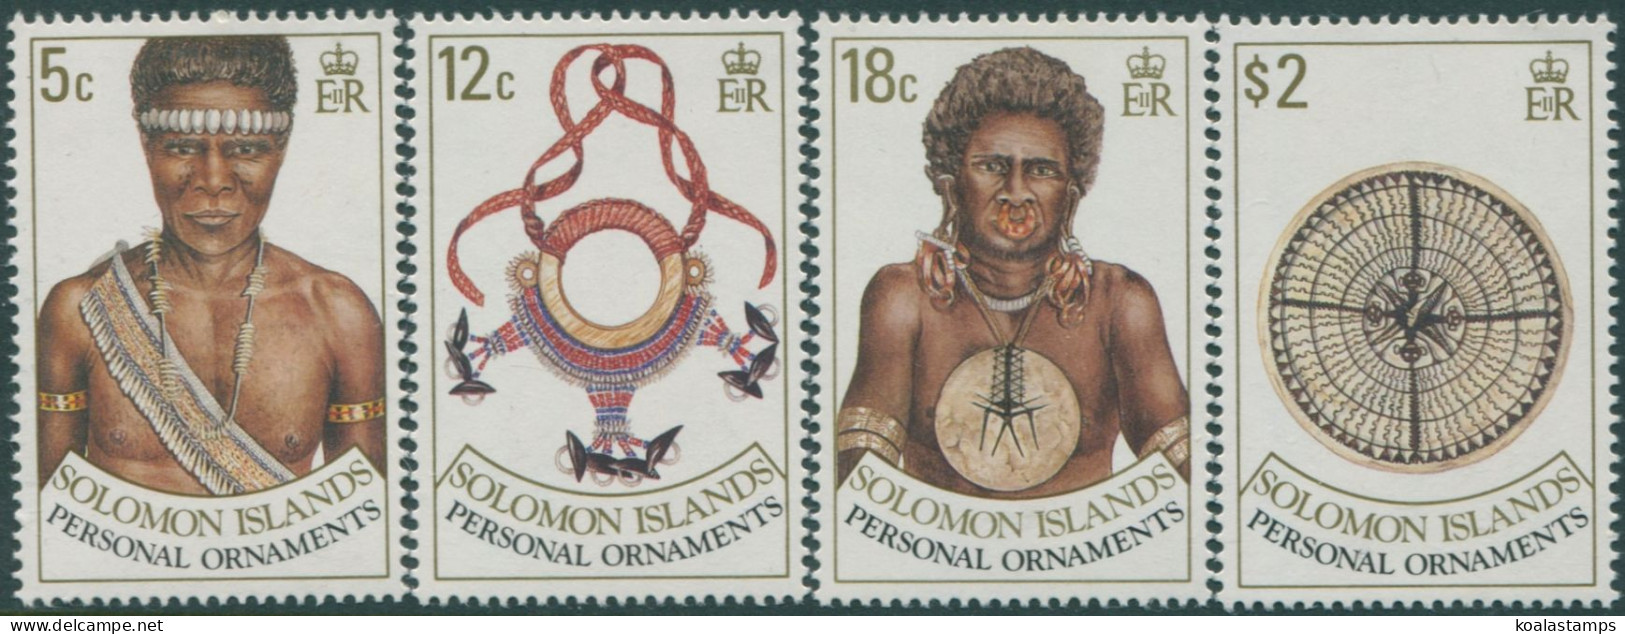 Solomon Islands 1990 SG666-669 Personal Ornaments Set MNH - Salomoninseln (Salomonen 1978-...)